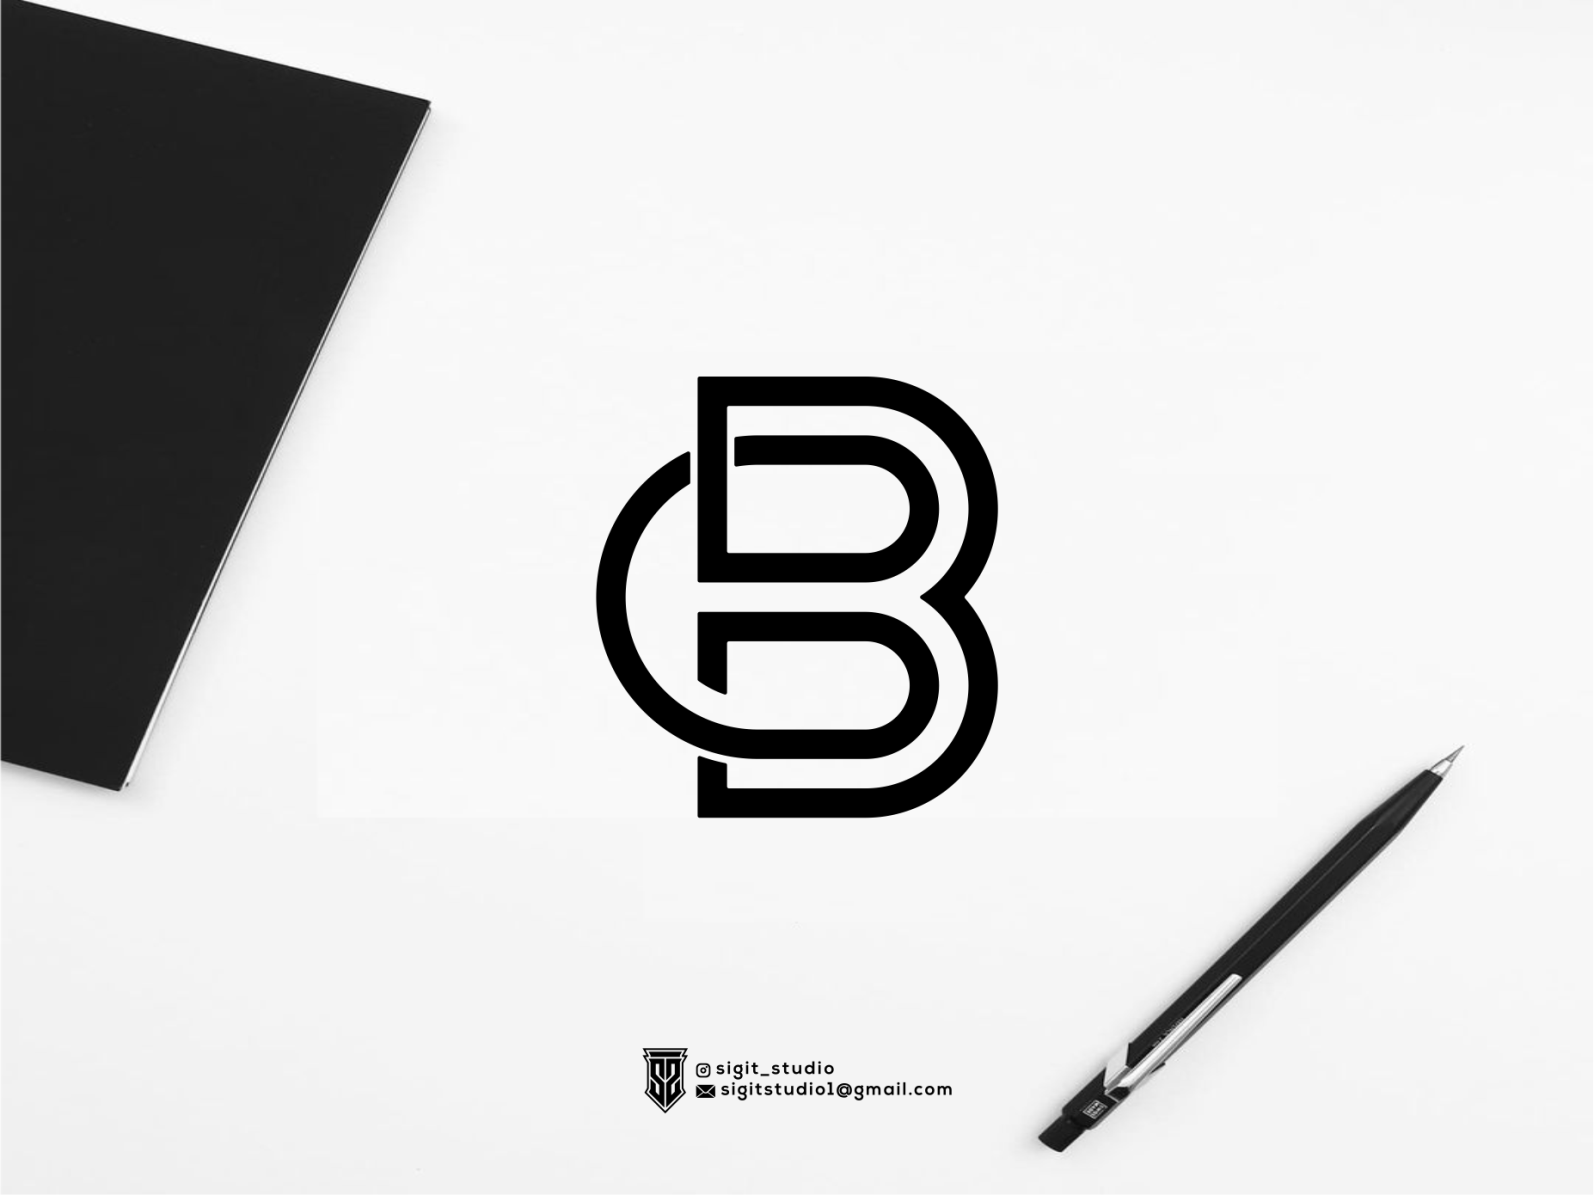 cb monogram logo concept by sigit_studio on Dribbble